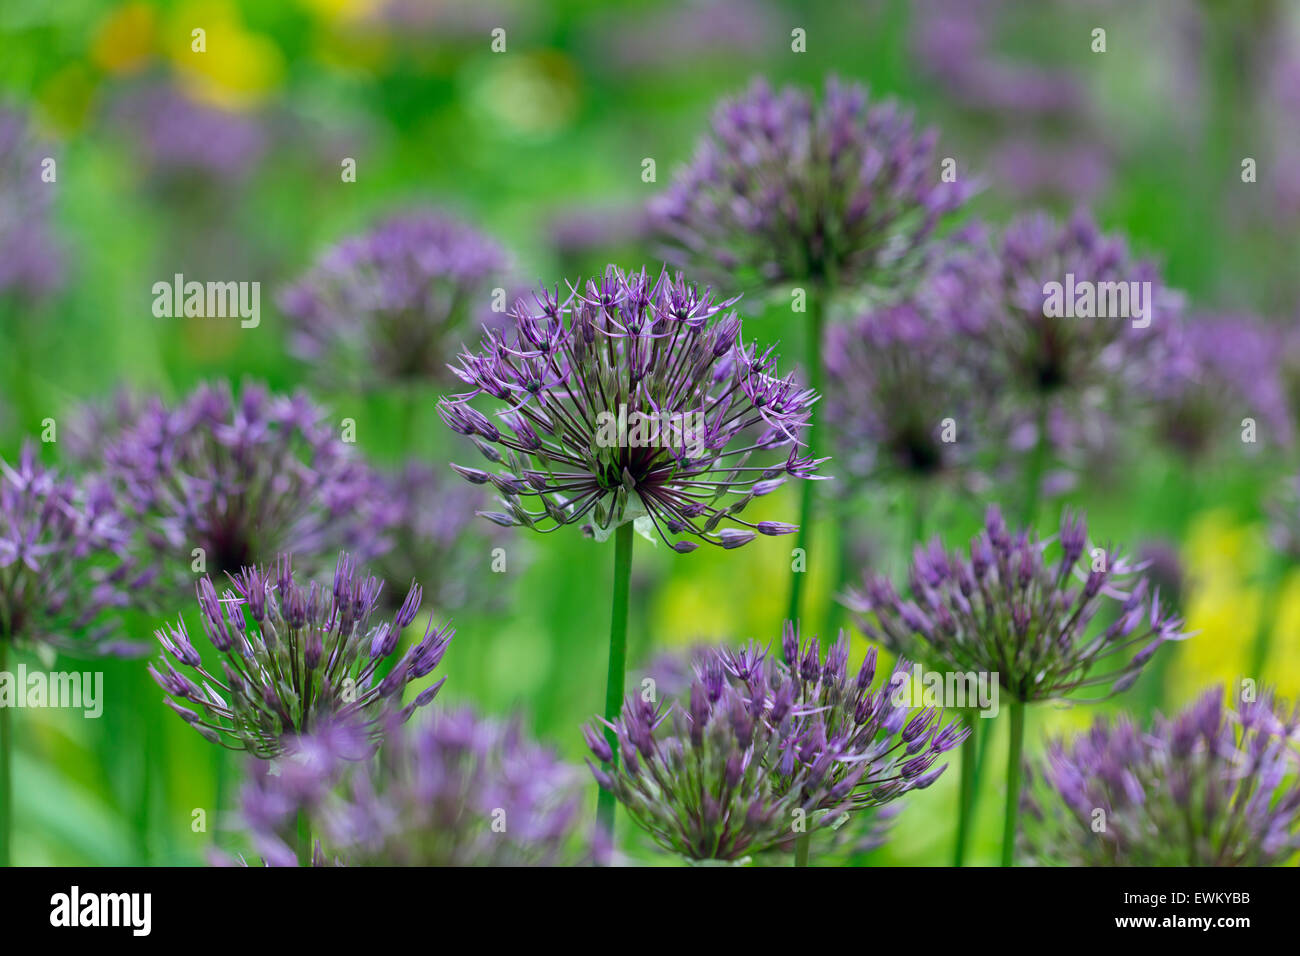 Allium Purple sensation ornamental onion flower Stock Photo